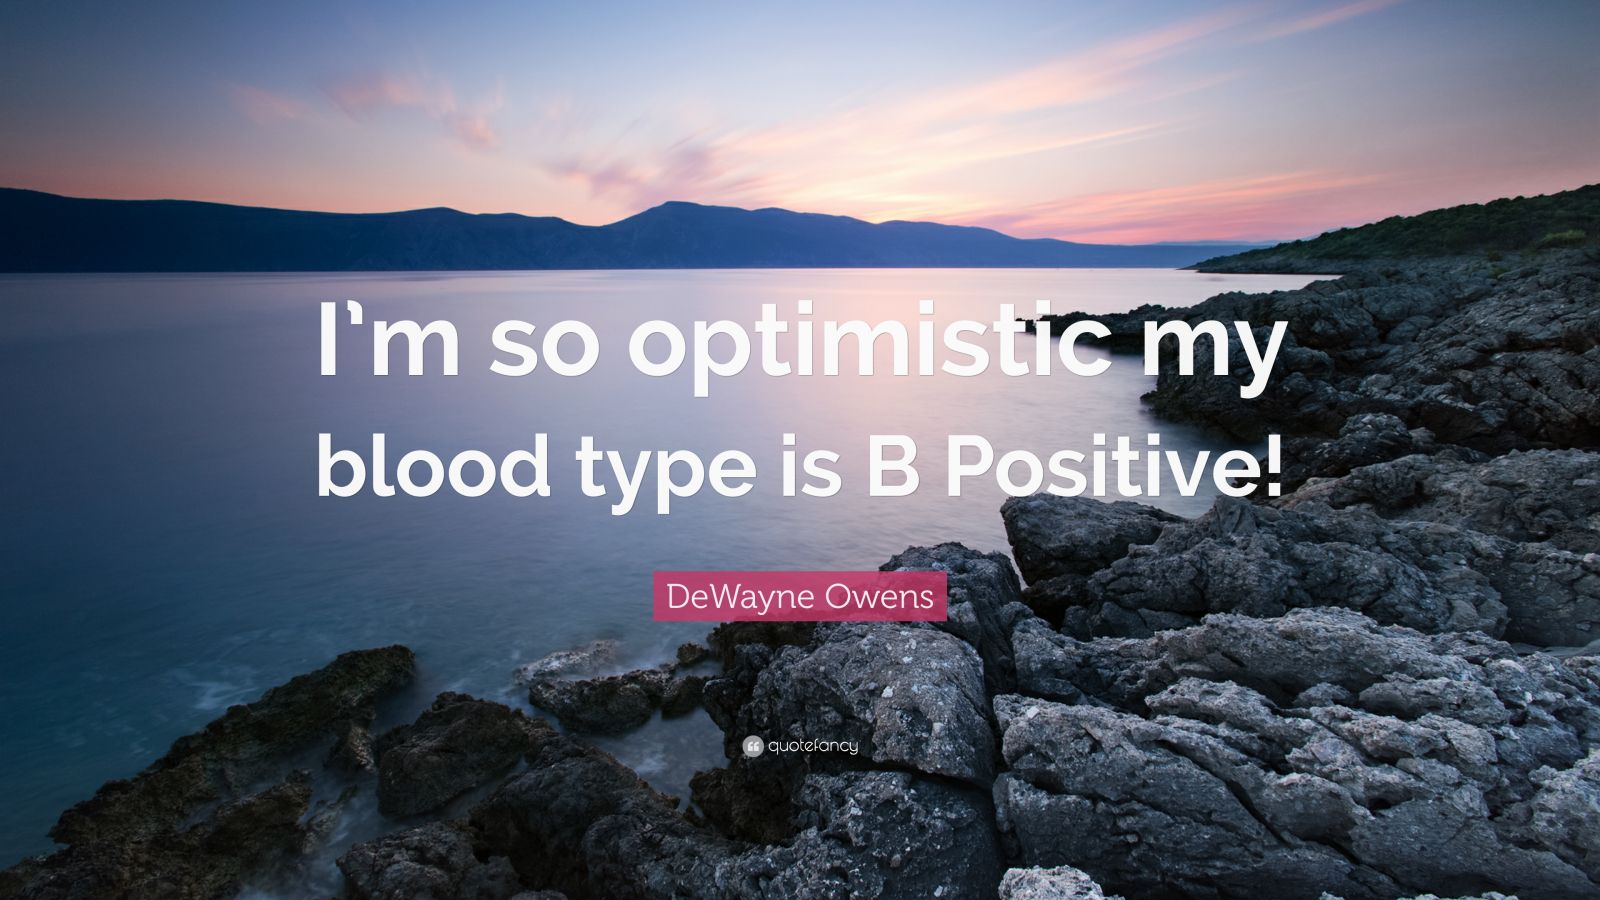 DeWayne Owens Quote: “I'm so optimistic my blood type is B Positive!”